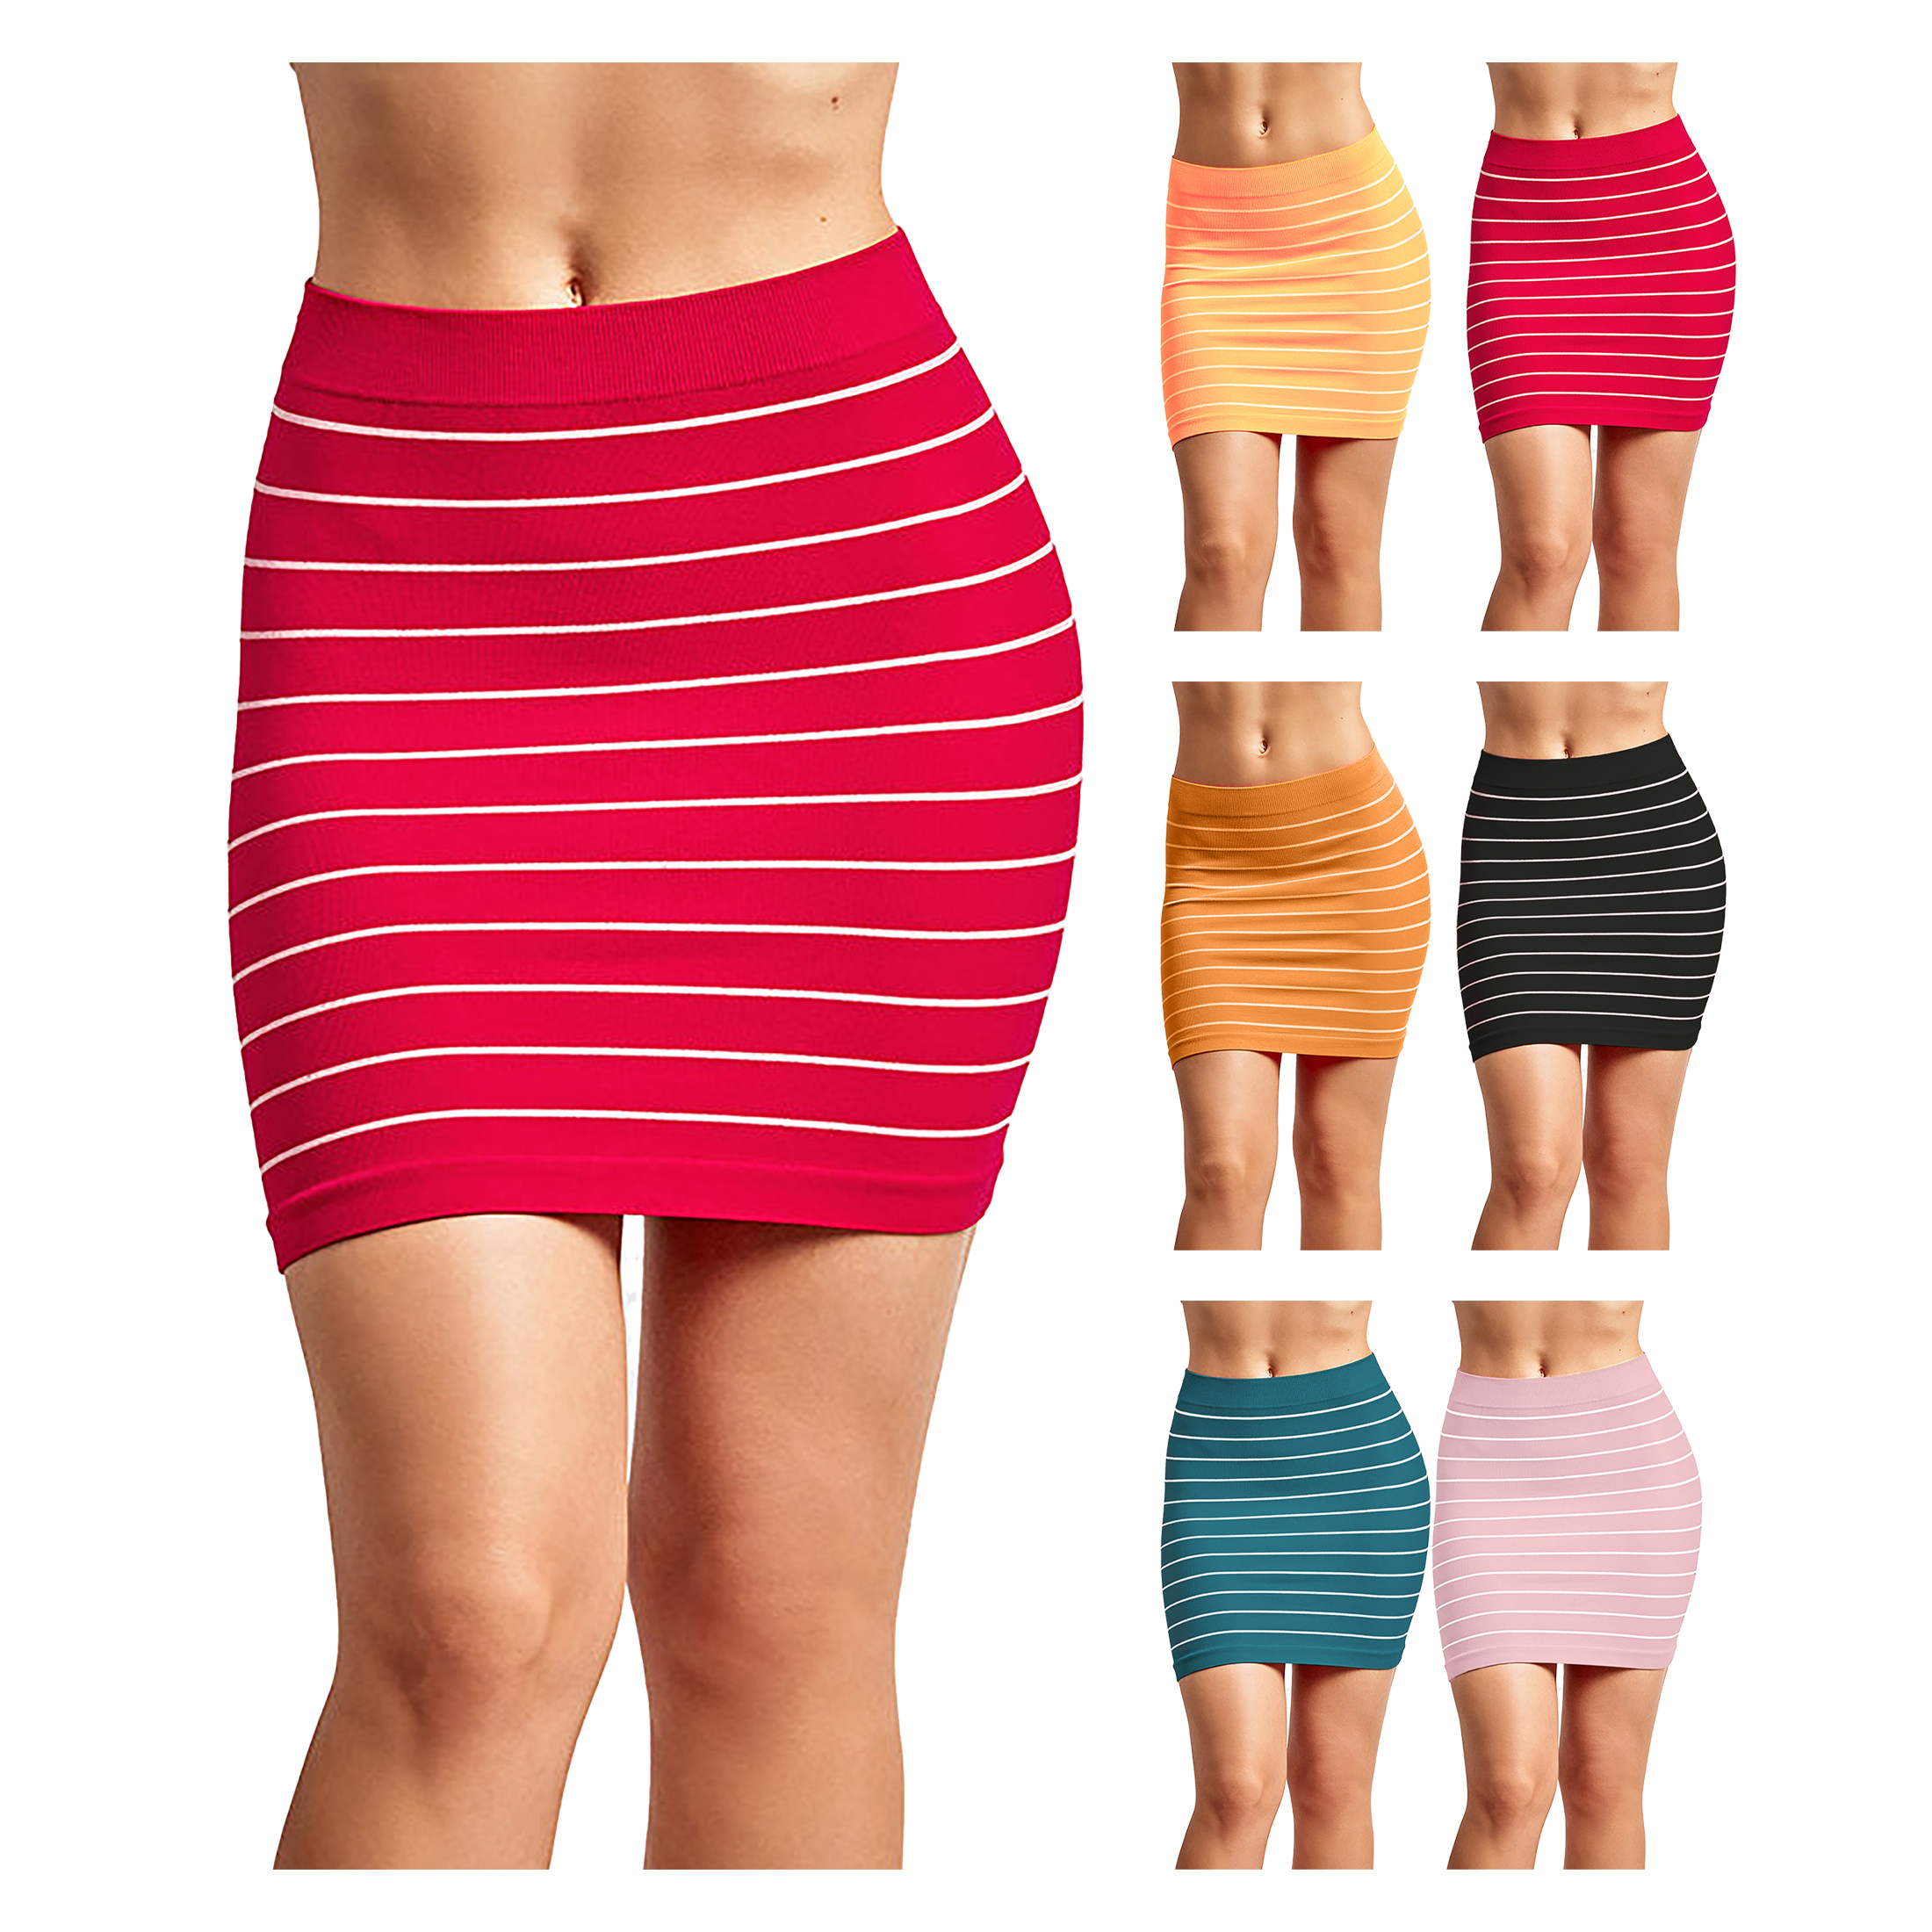 3-Pack: Women's Striped Seamless Microfiber Slim Nylon Pull-On Closure Mini Skirts - Large